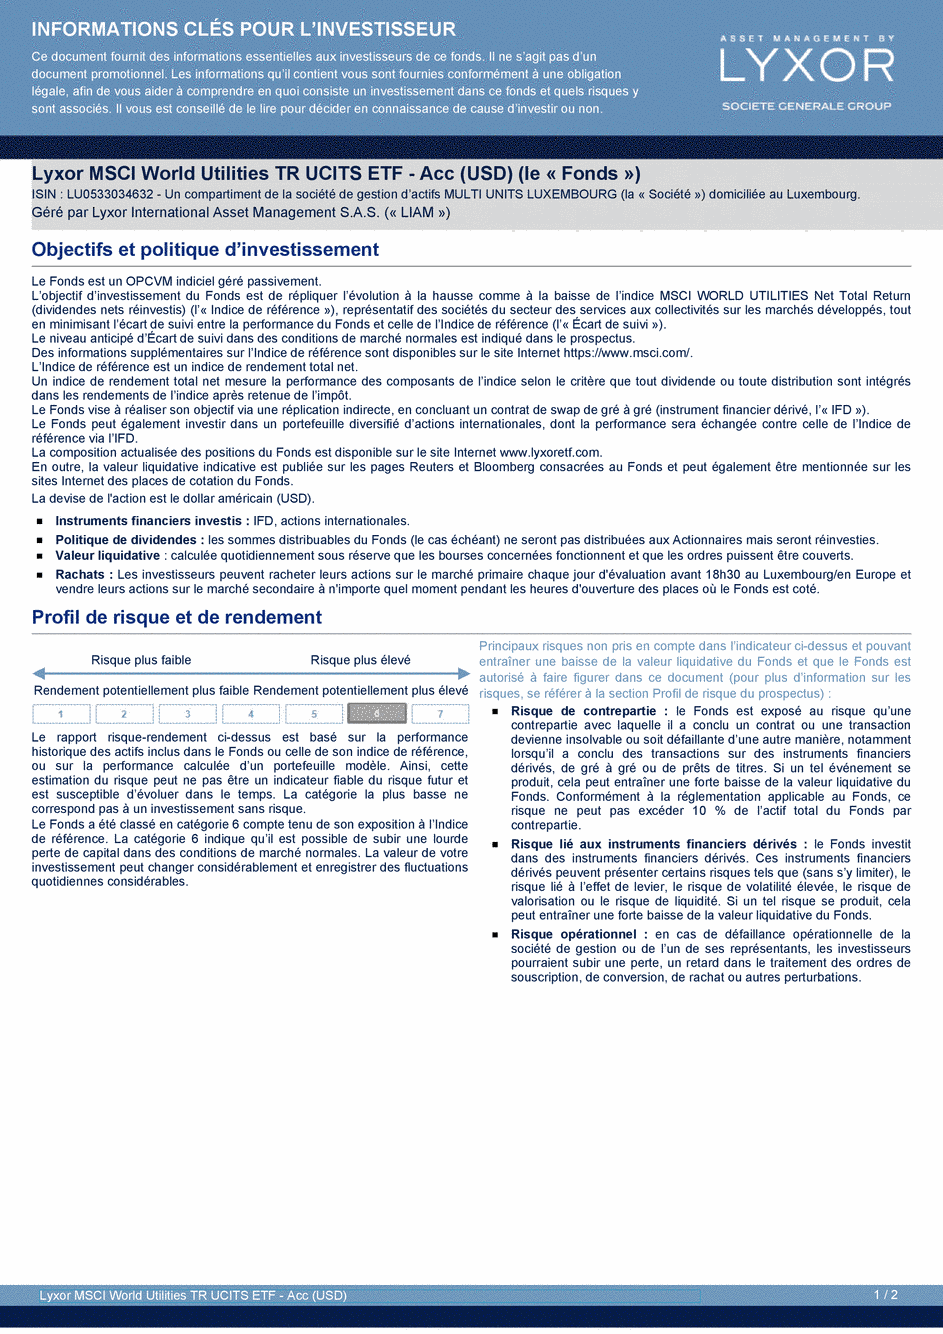 DICI Lyxor MSCI World Utilities TR UCITS ETF - Acc (USD) - 26/08/2020 - Français